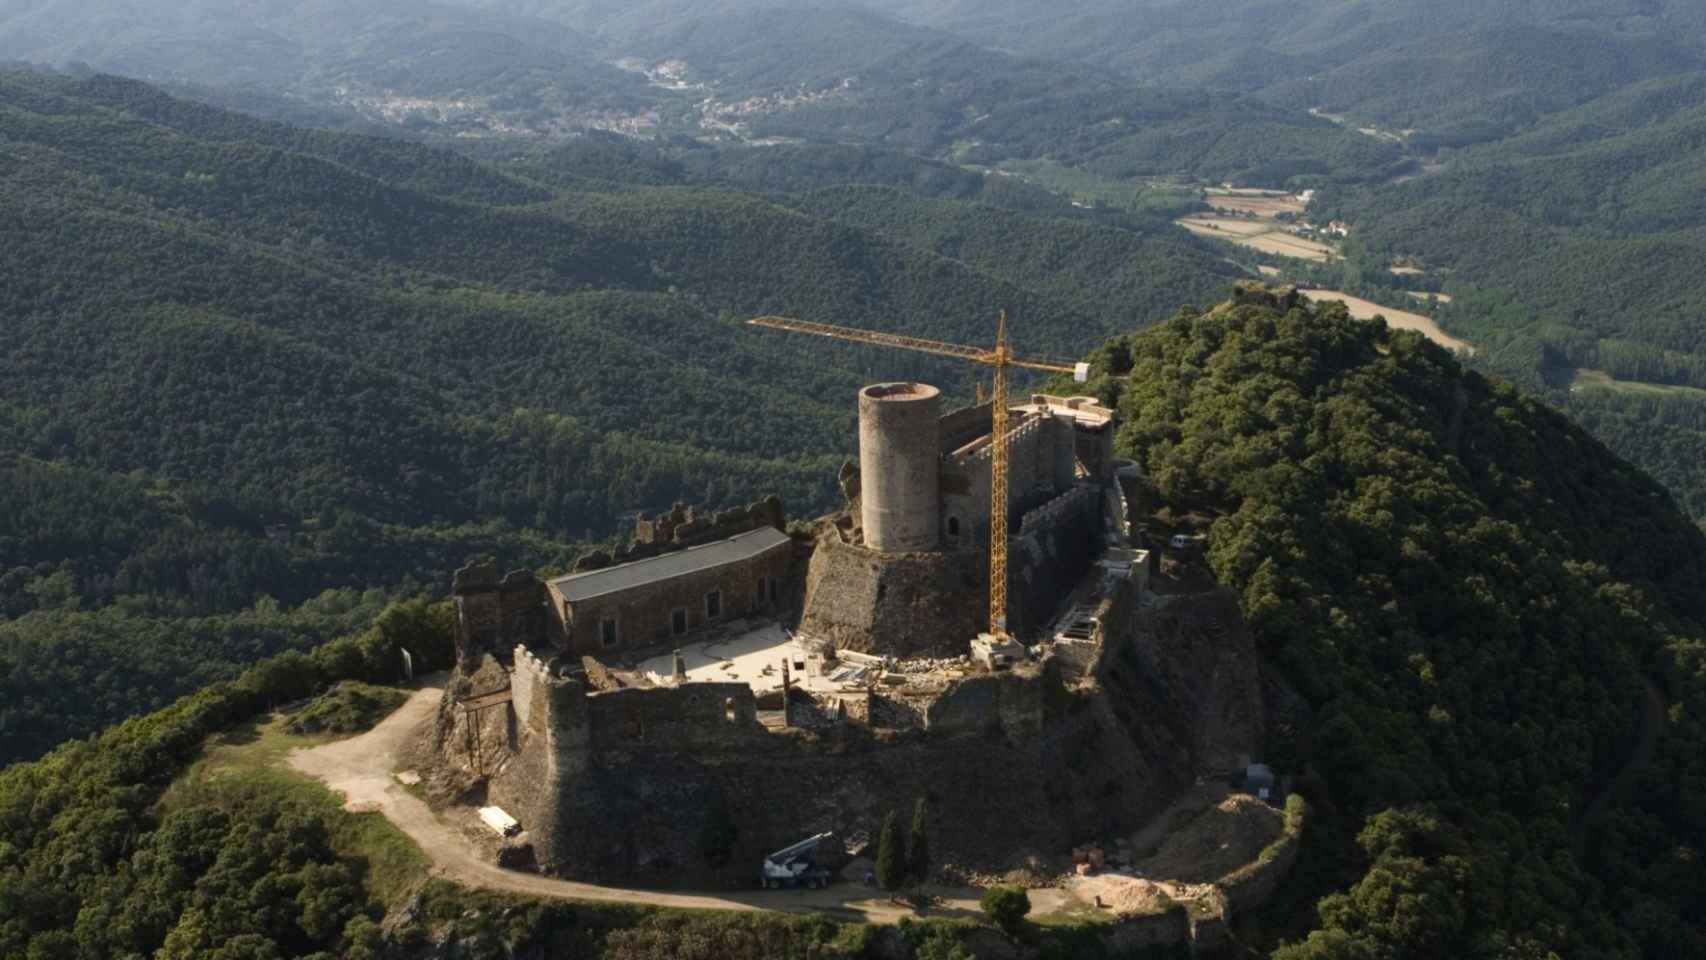 Castillo de Montsoriu